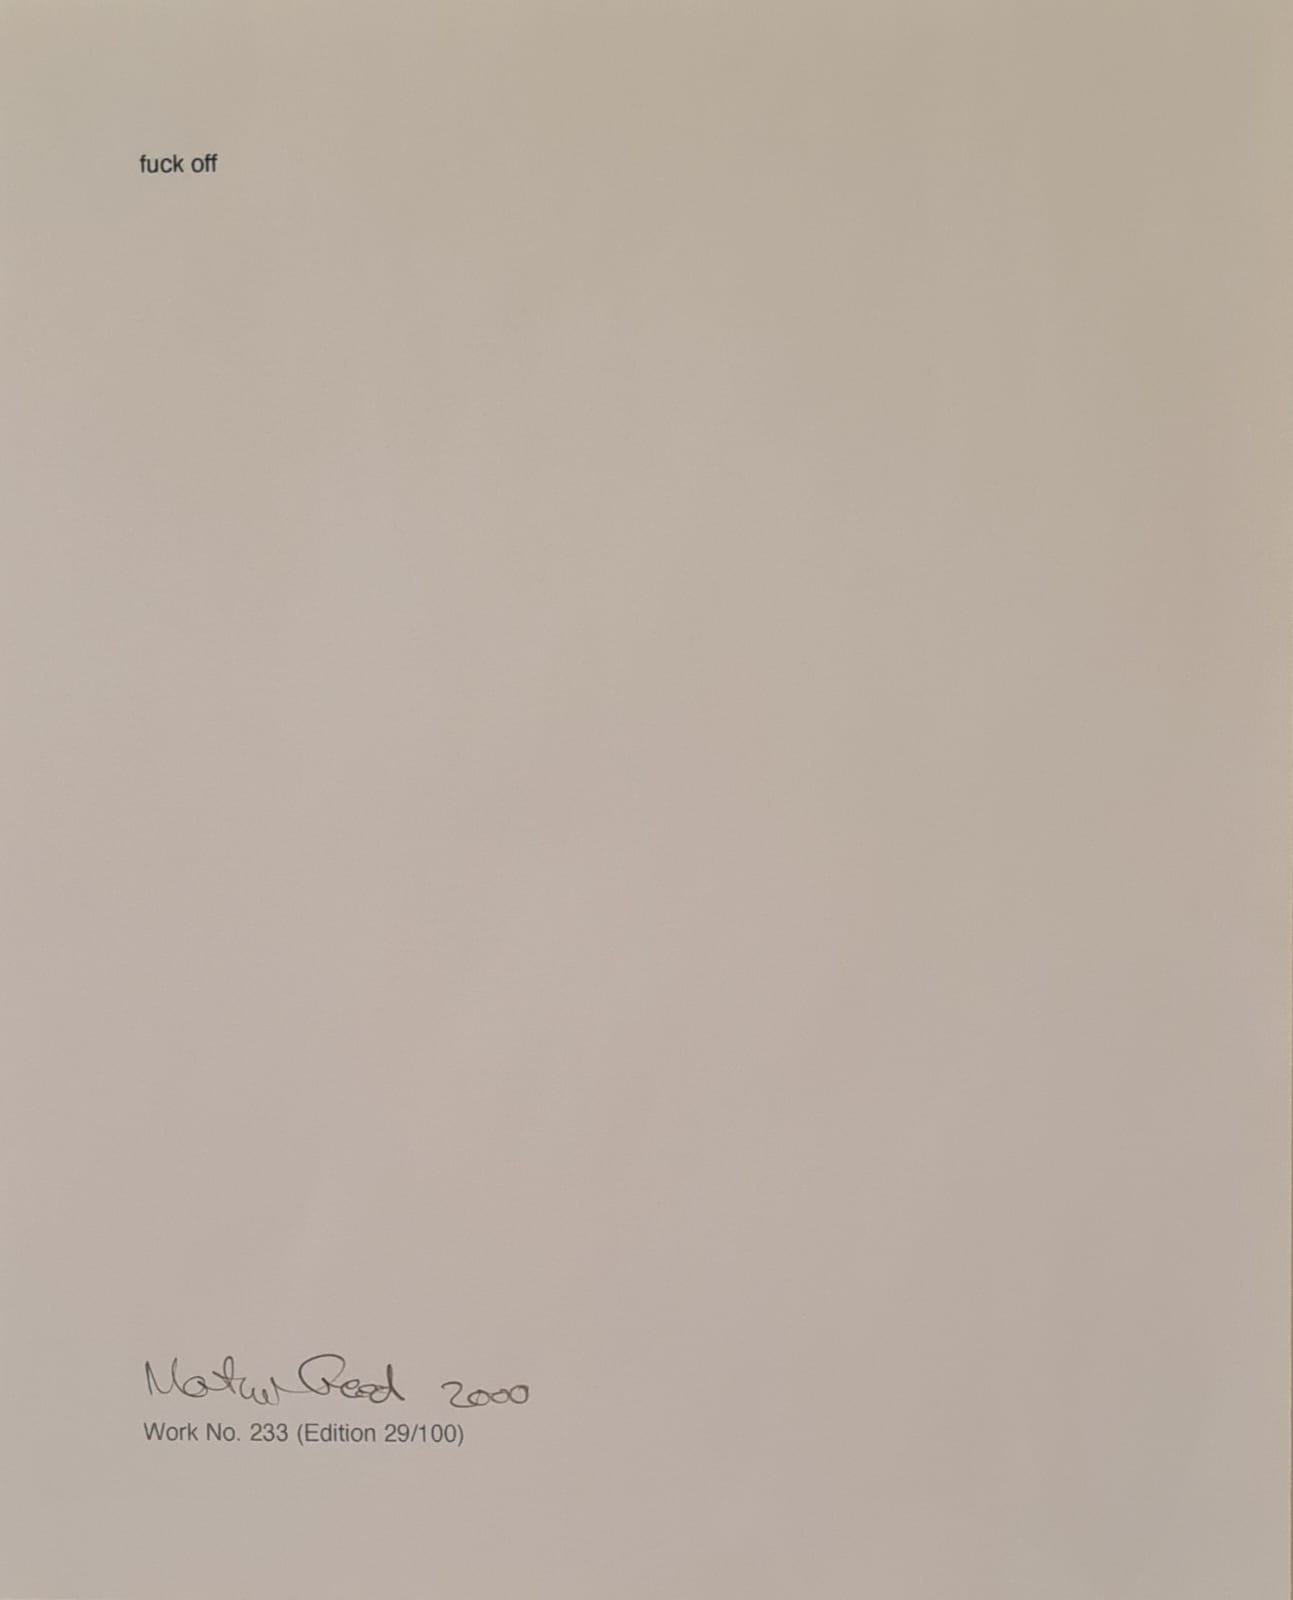 Work No. 235; fuck off (Cubitt Street Studios Portfolio of 20 prints) (2000)